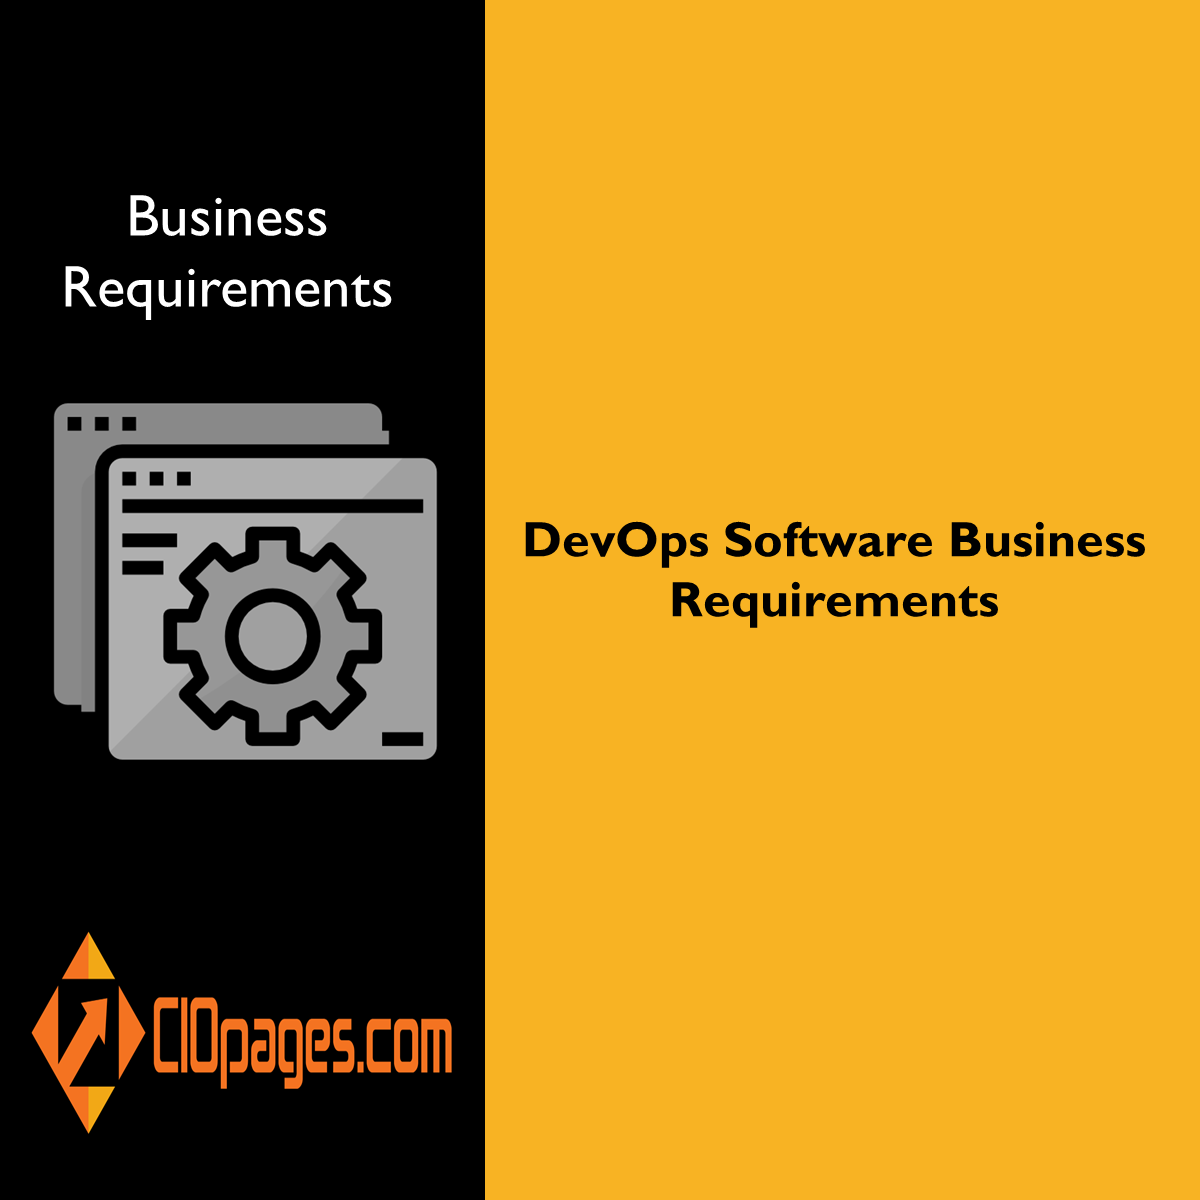 DevOps Software Business Requirements